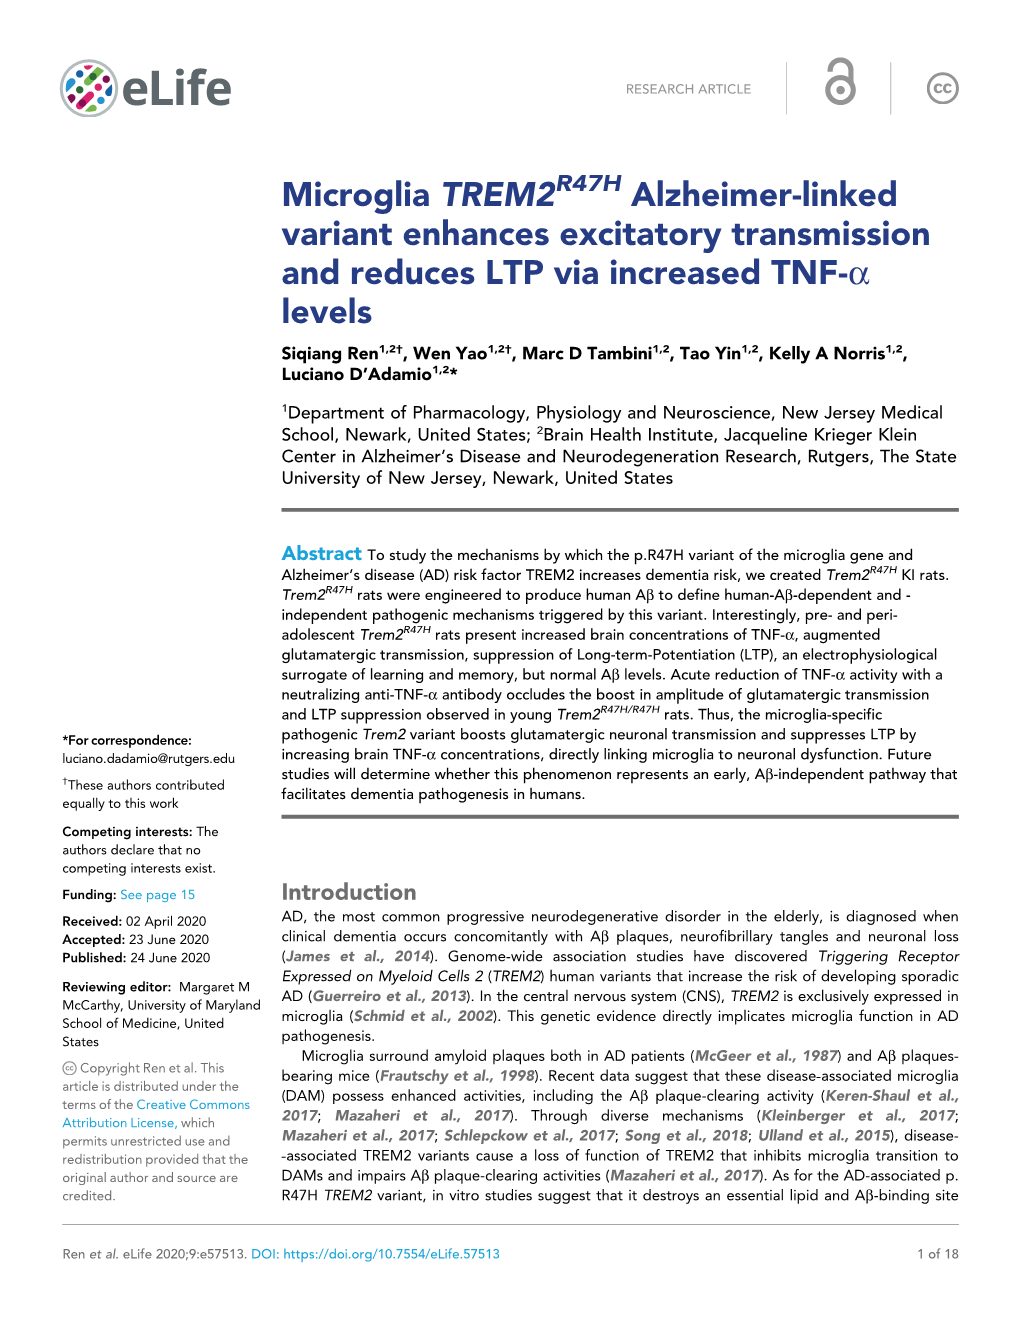 Microglia TREM2 Alzheimer-Linked Variant Enhances Excitatory